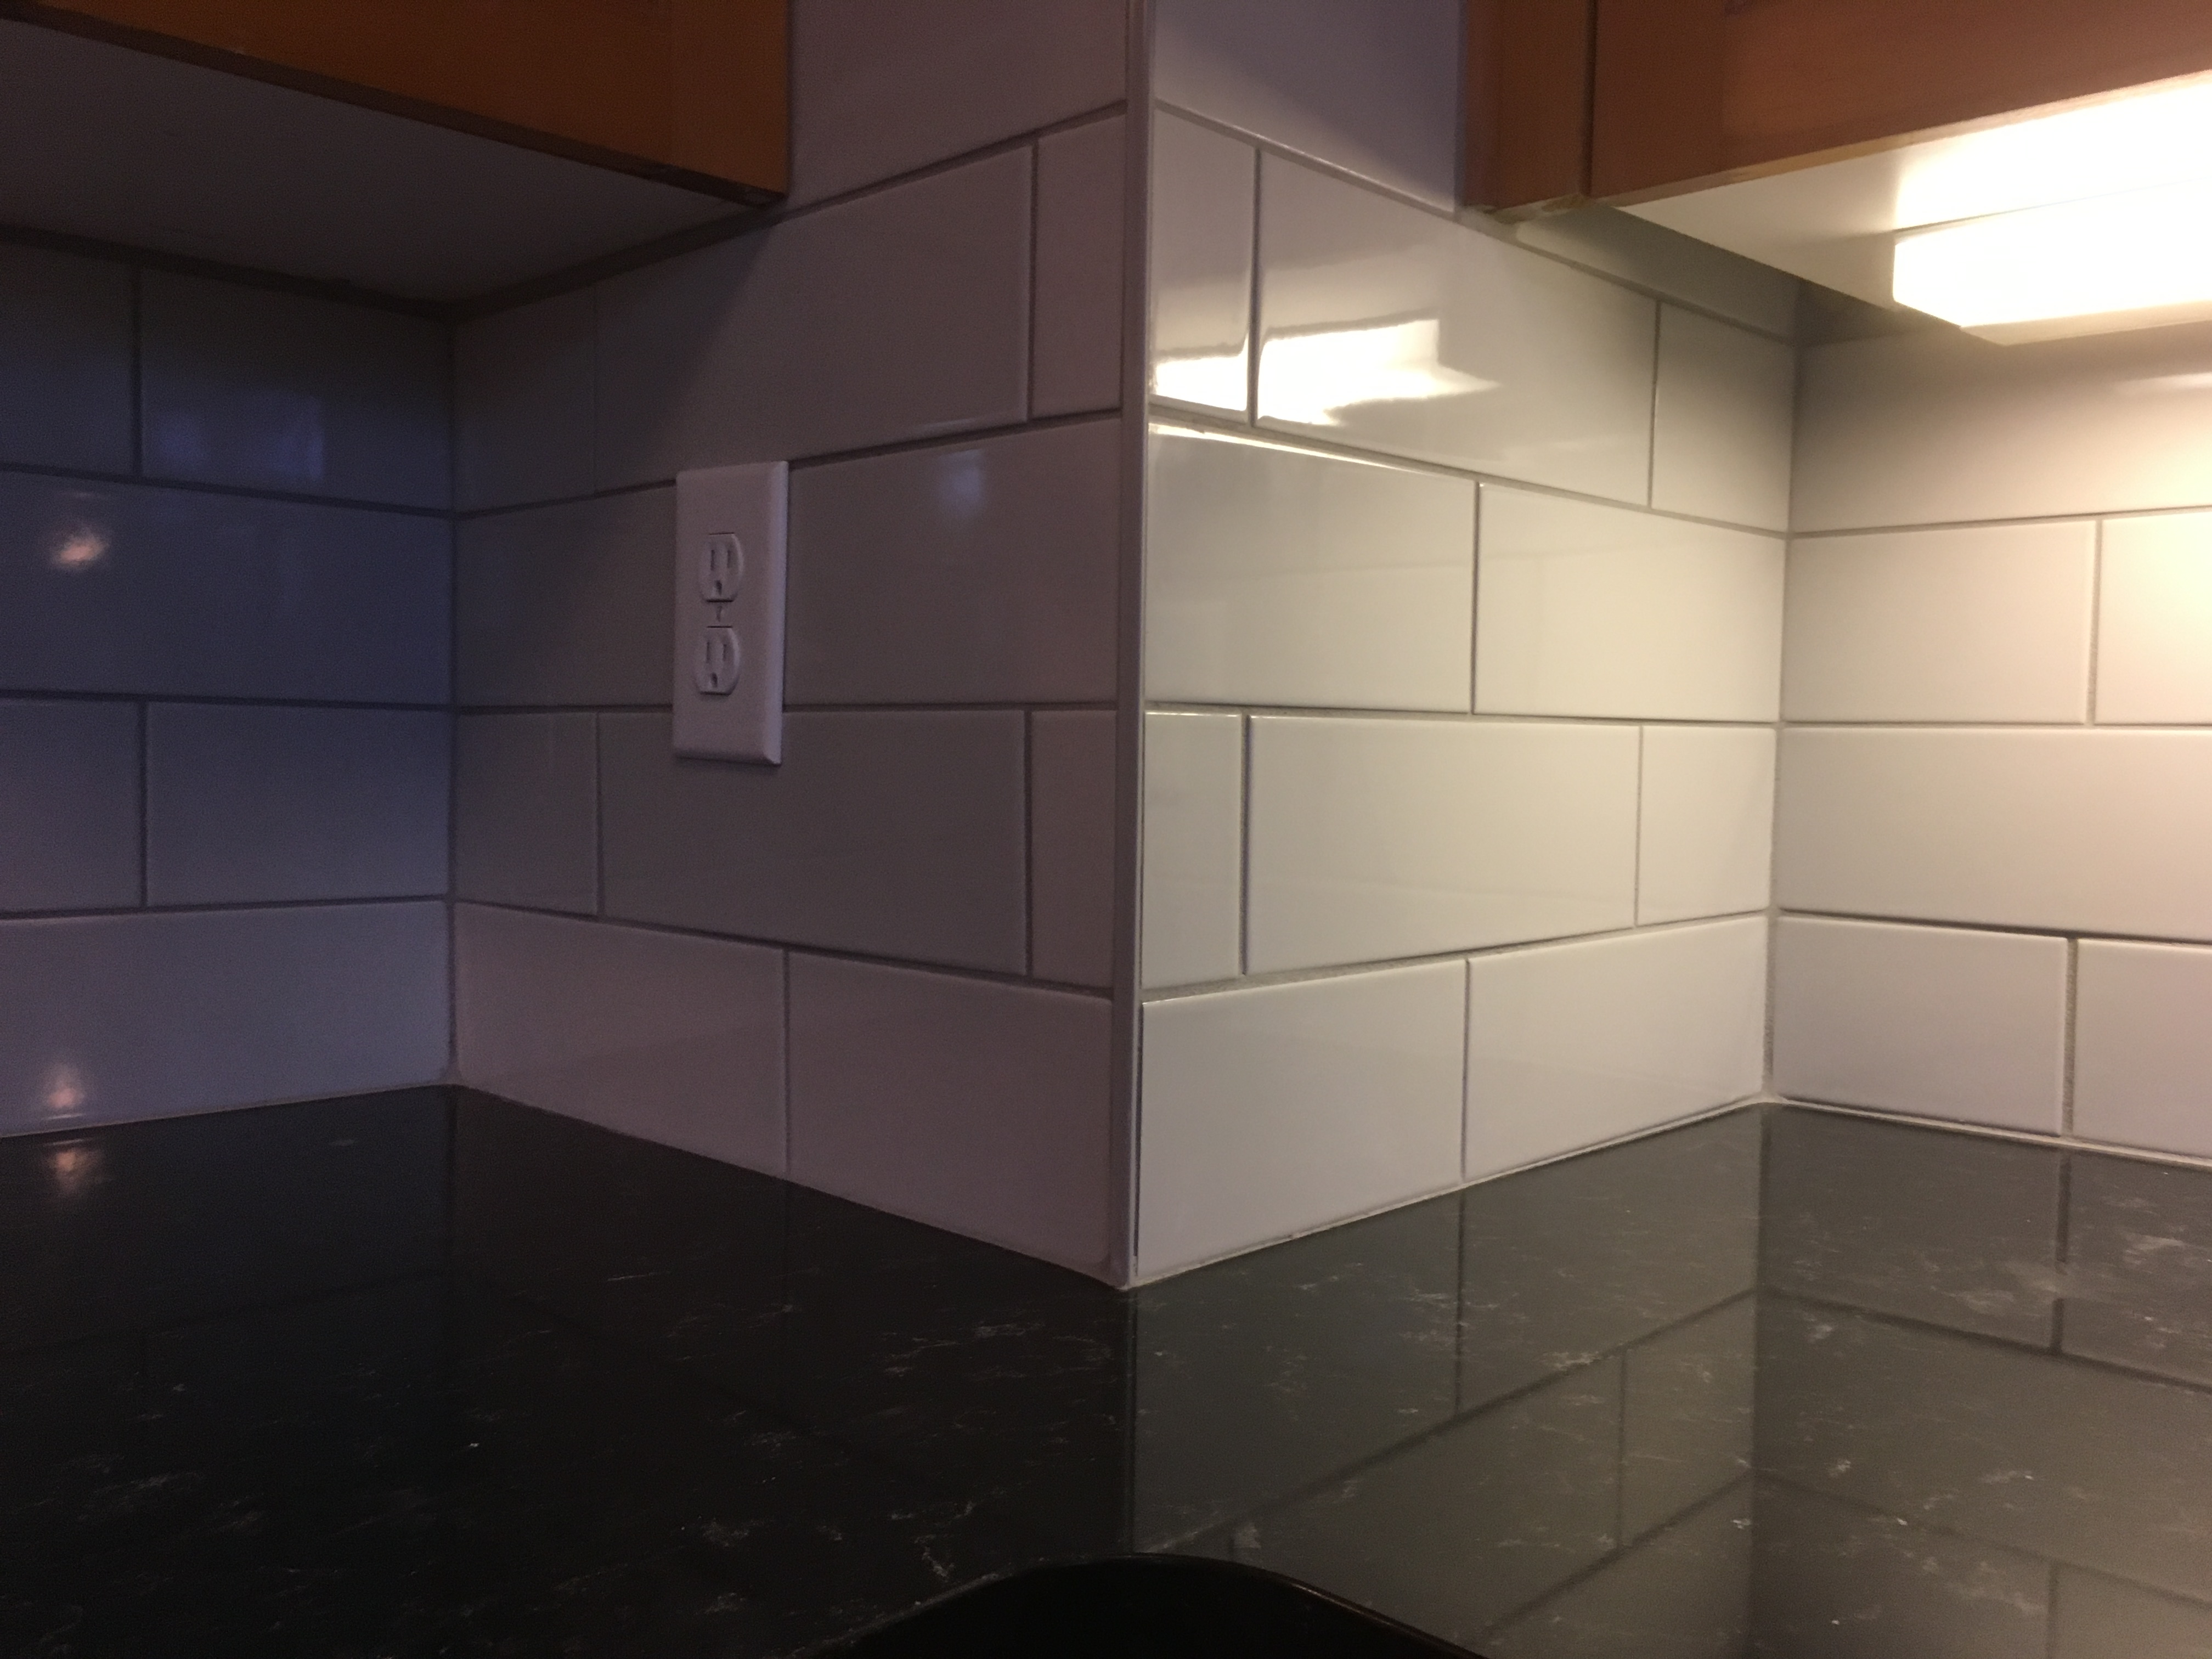 Quartz counter with tile backsplash